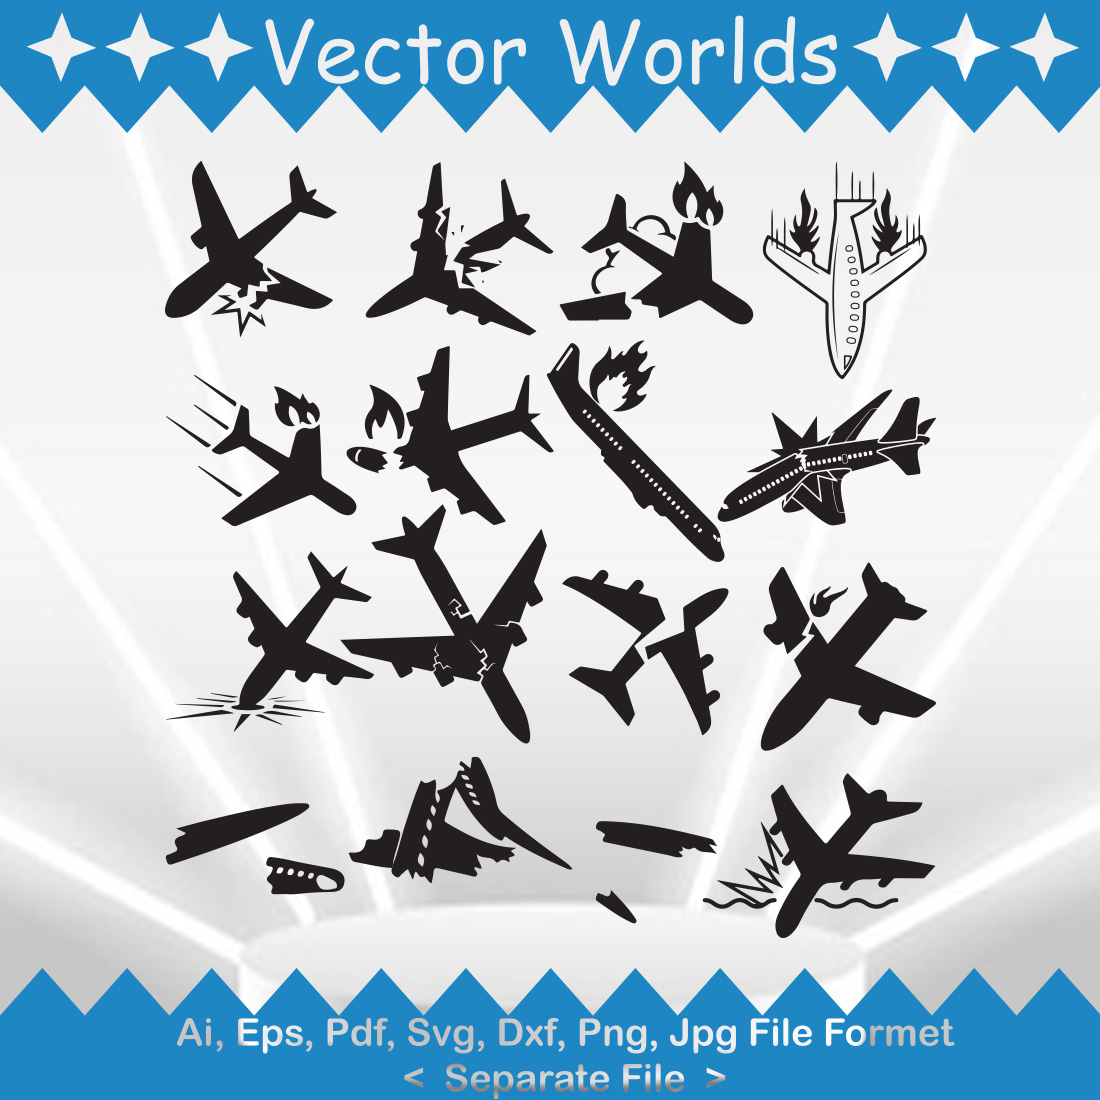 Plane Crash SVG Vector Design cover image.